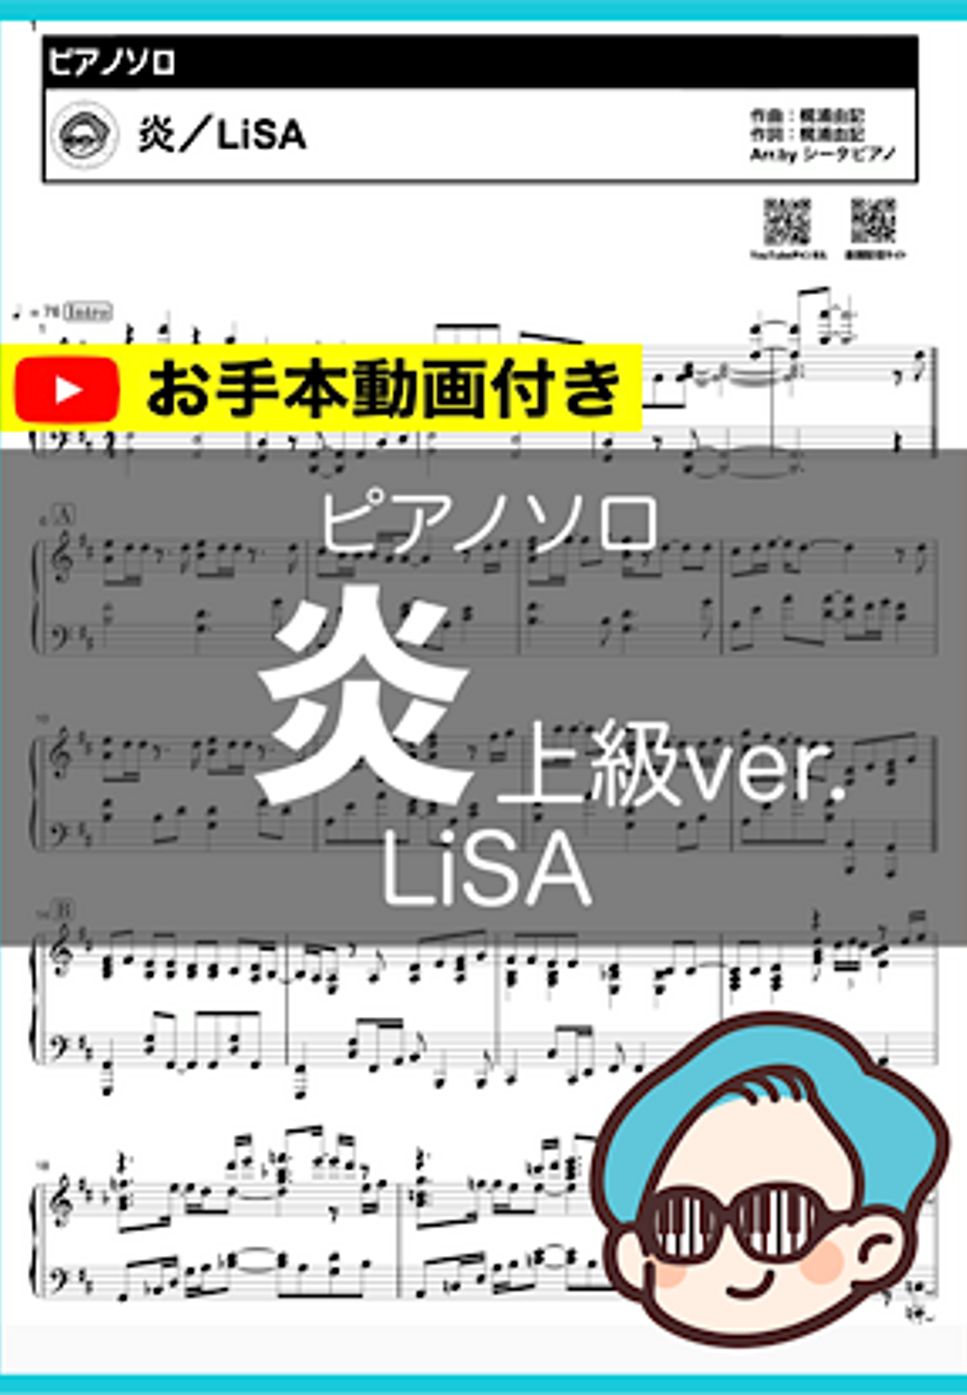 LiSA - 炎 (上級ver.) by シータピアノ